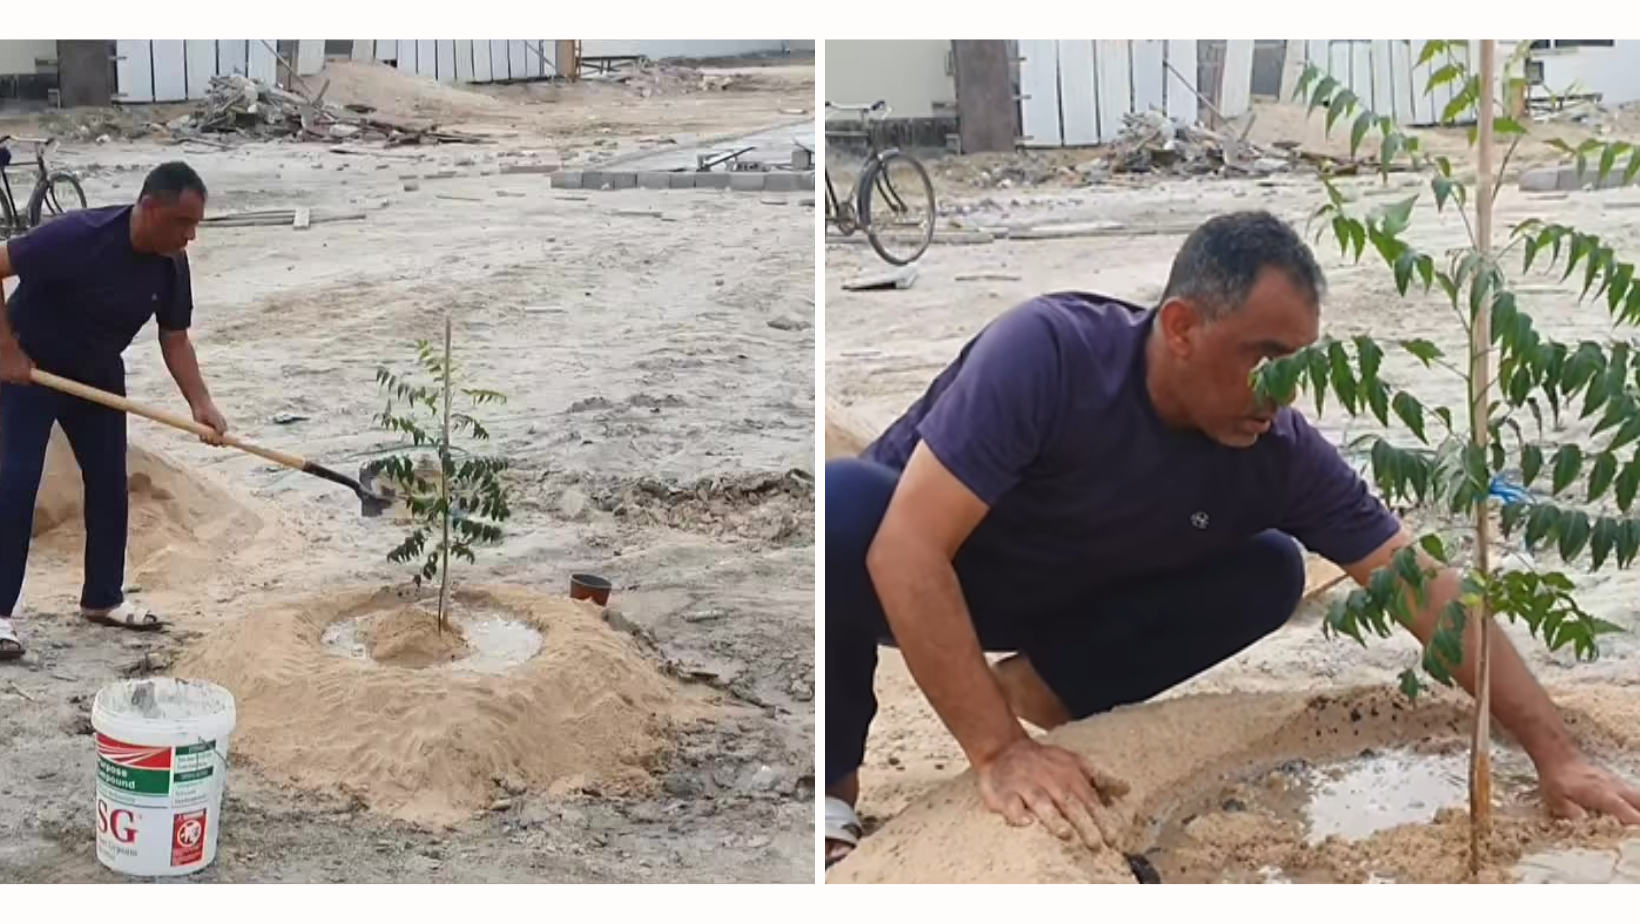 tree-planting campaign, Al-Mazara neighborhood, youth initiative, community action, gardening adventure, environmental transformation, plants in bahrain, green bahrain, planting campaign in bahrain, local bahrain, localbh, trees in bahrain, deforestation in bahrain, community in bahrain, bahrain trees, bahrain community, bahrain, damistan, bahrain farms, bahraini farmers, farmers in bahrain, farms in bahrain